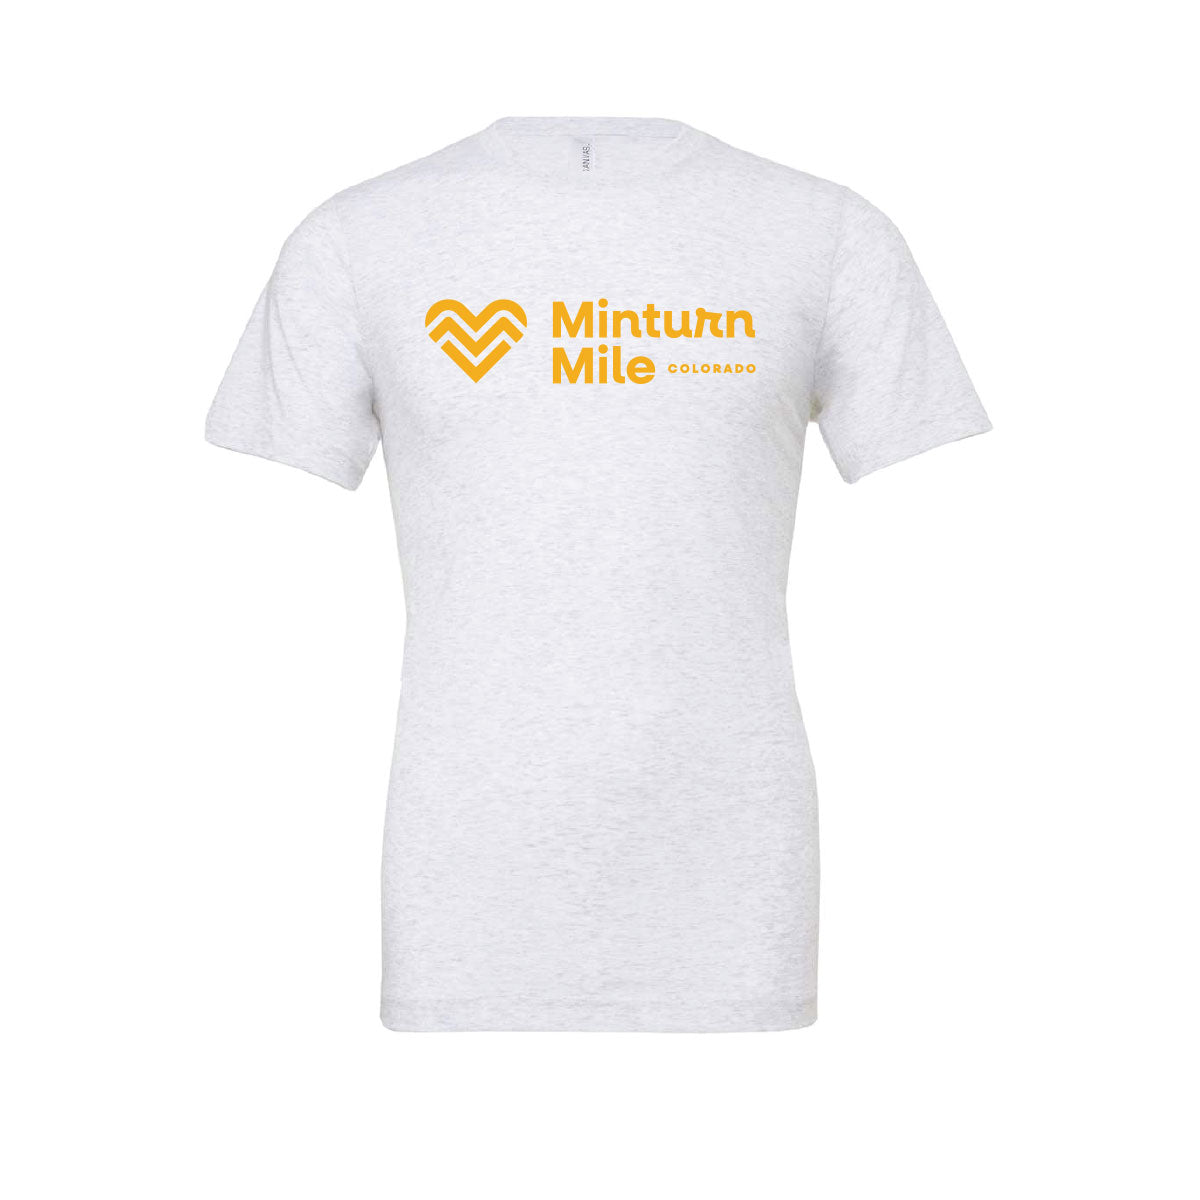 Minturn Mile T-shirt